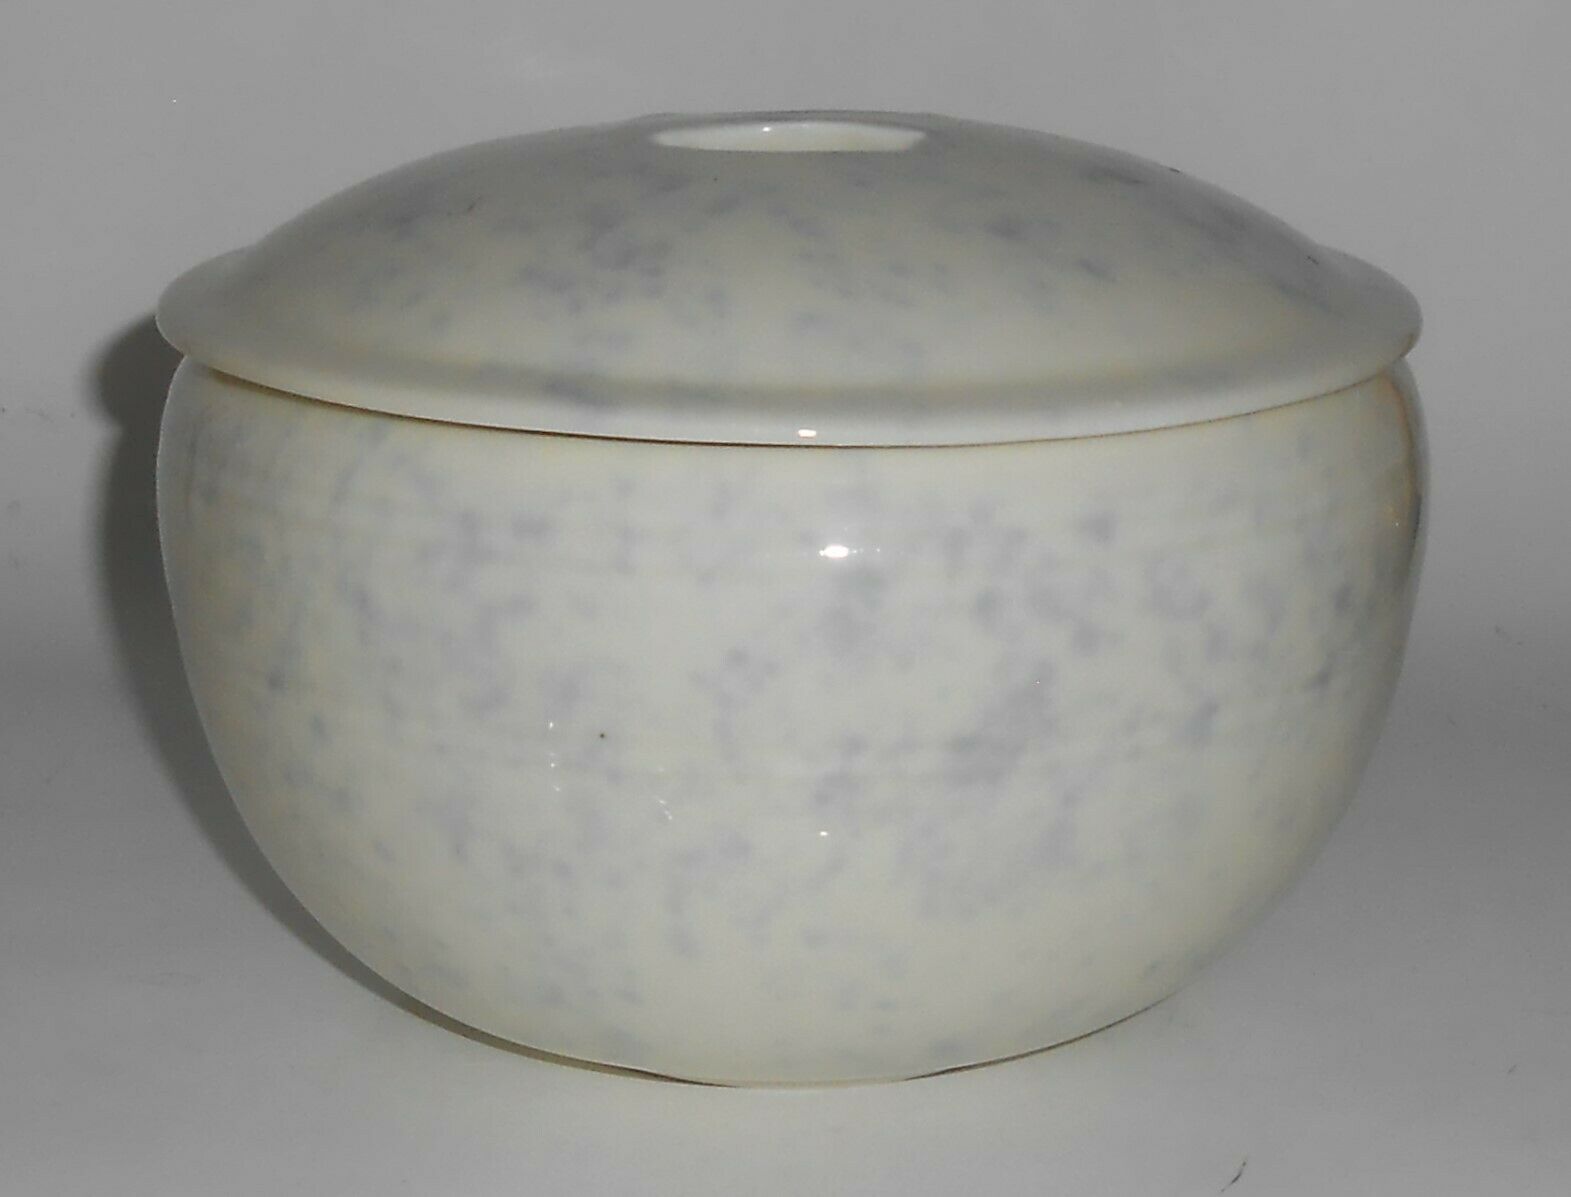 Coors Pottery Thermo Porcelain Blue Spongeware Triple Service Casserole